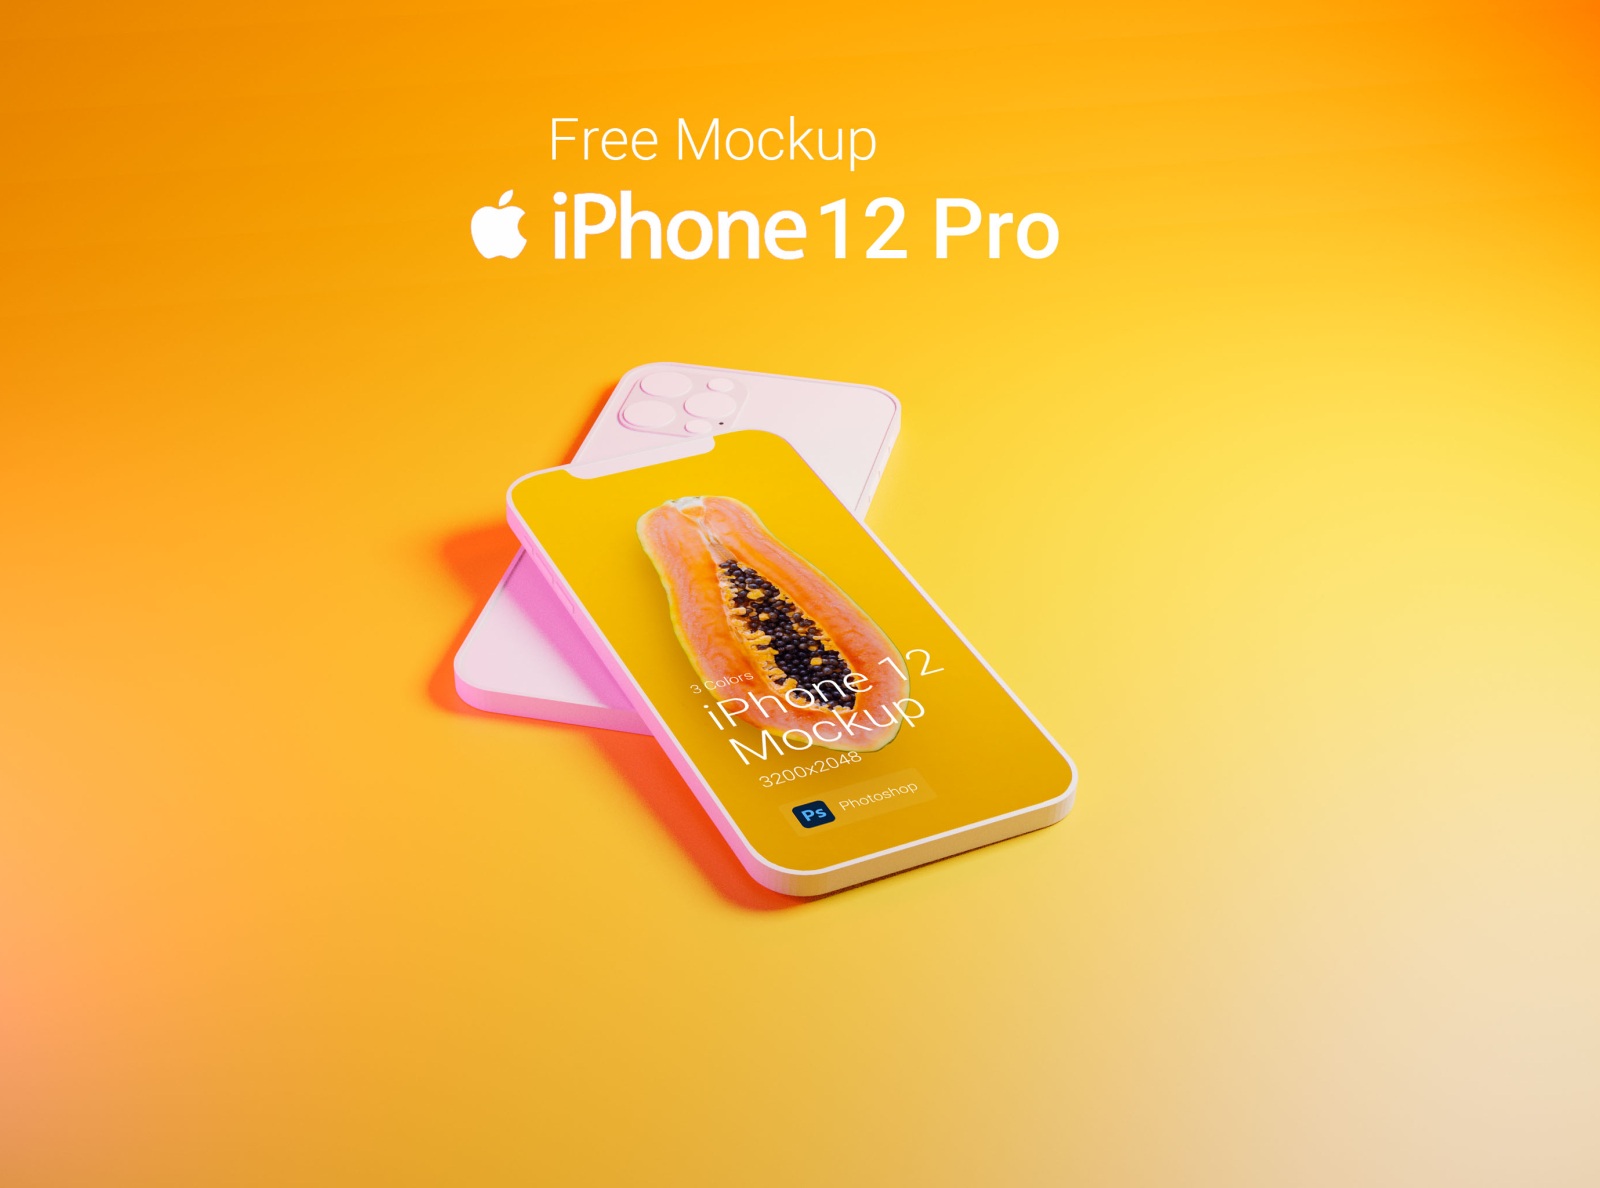 iPhone 12 Pro Free Mockup by Anton Goldobin on Dribbble